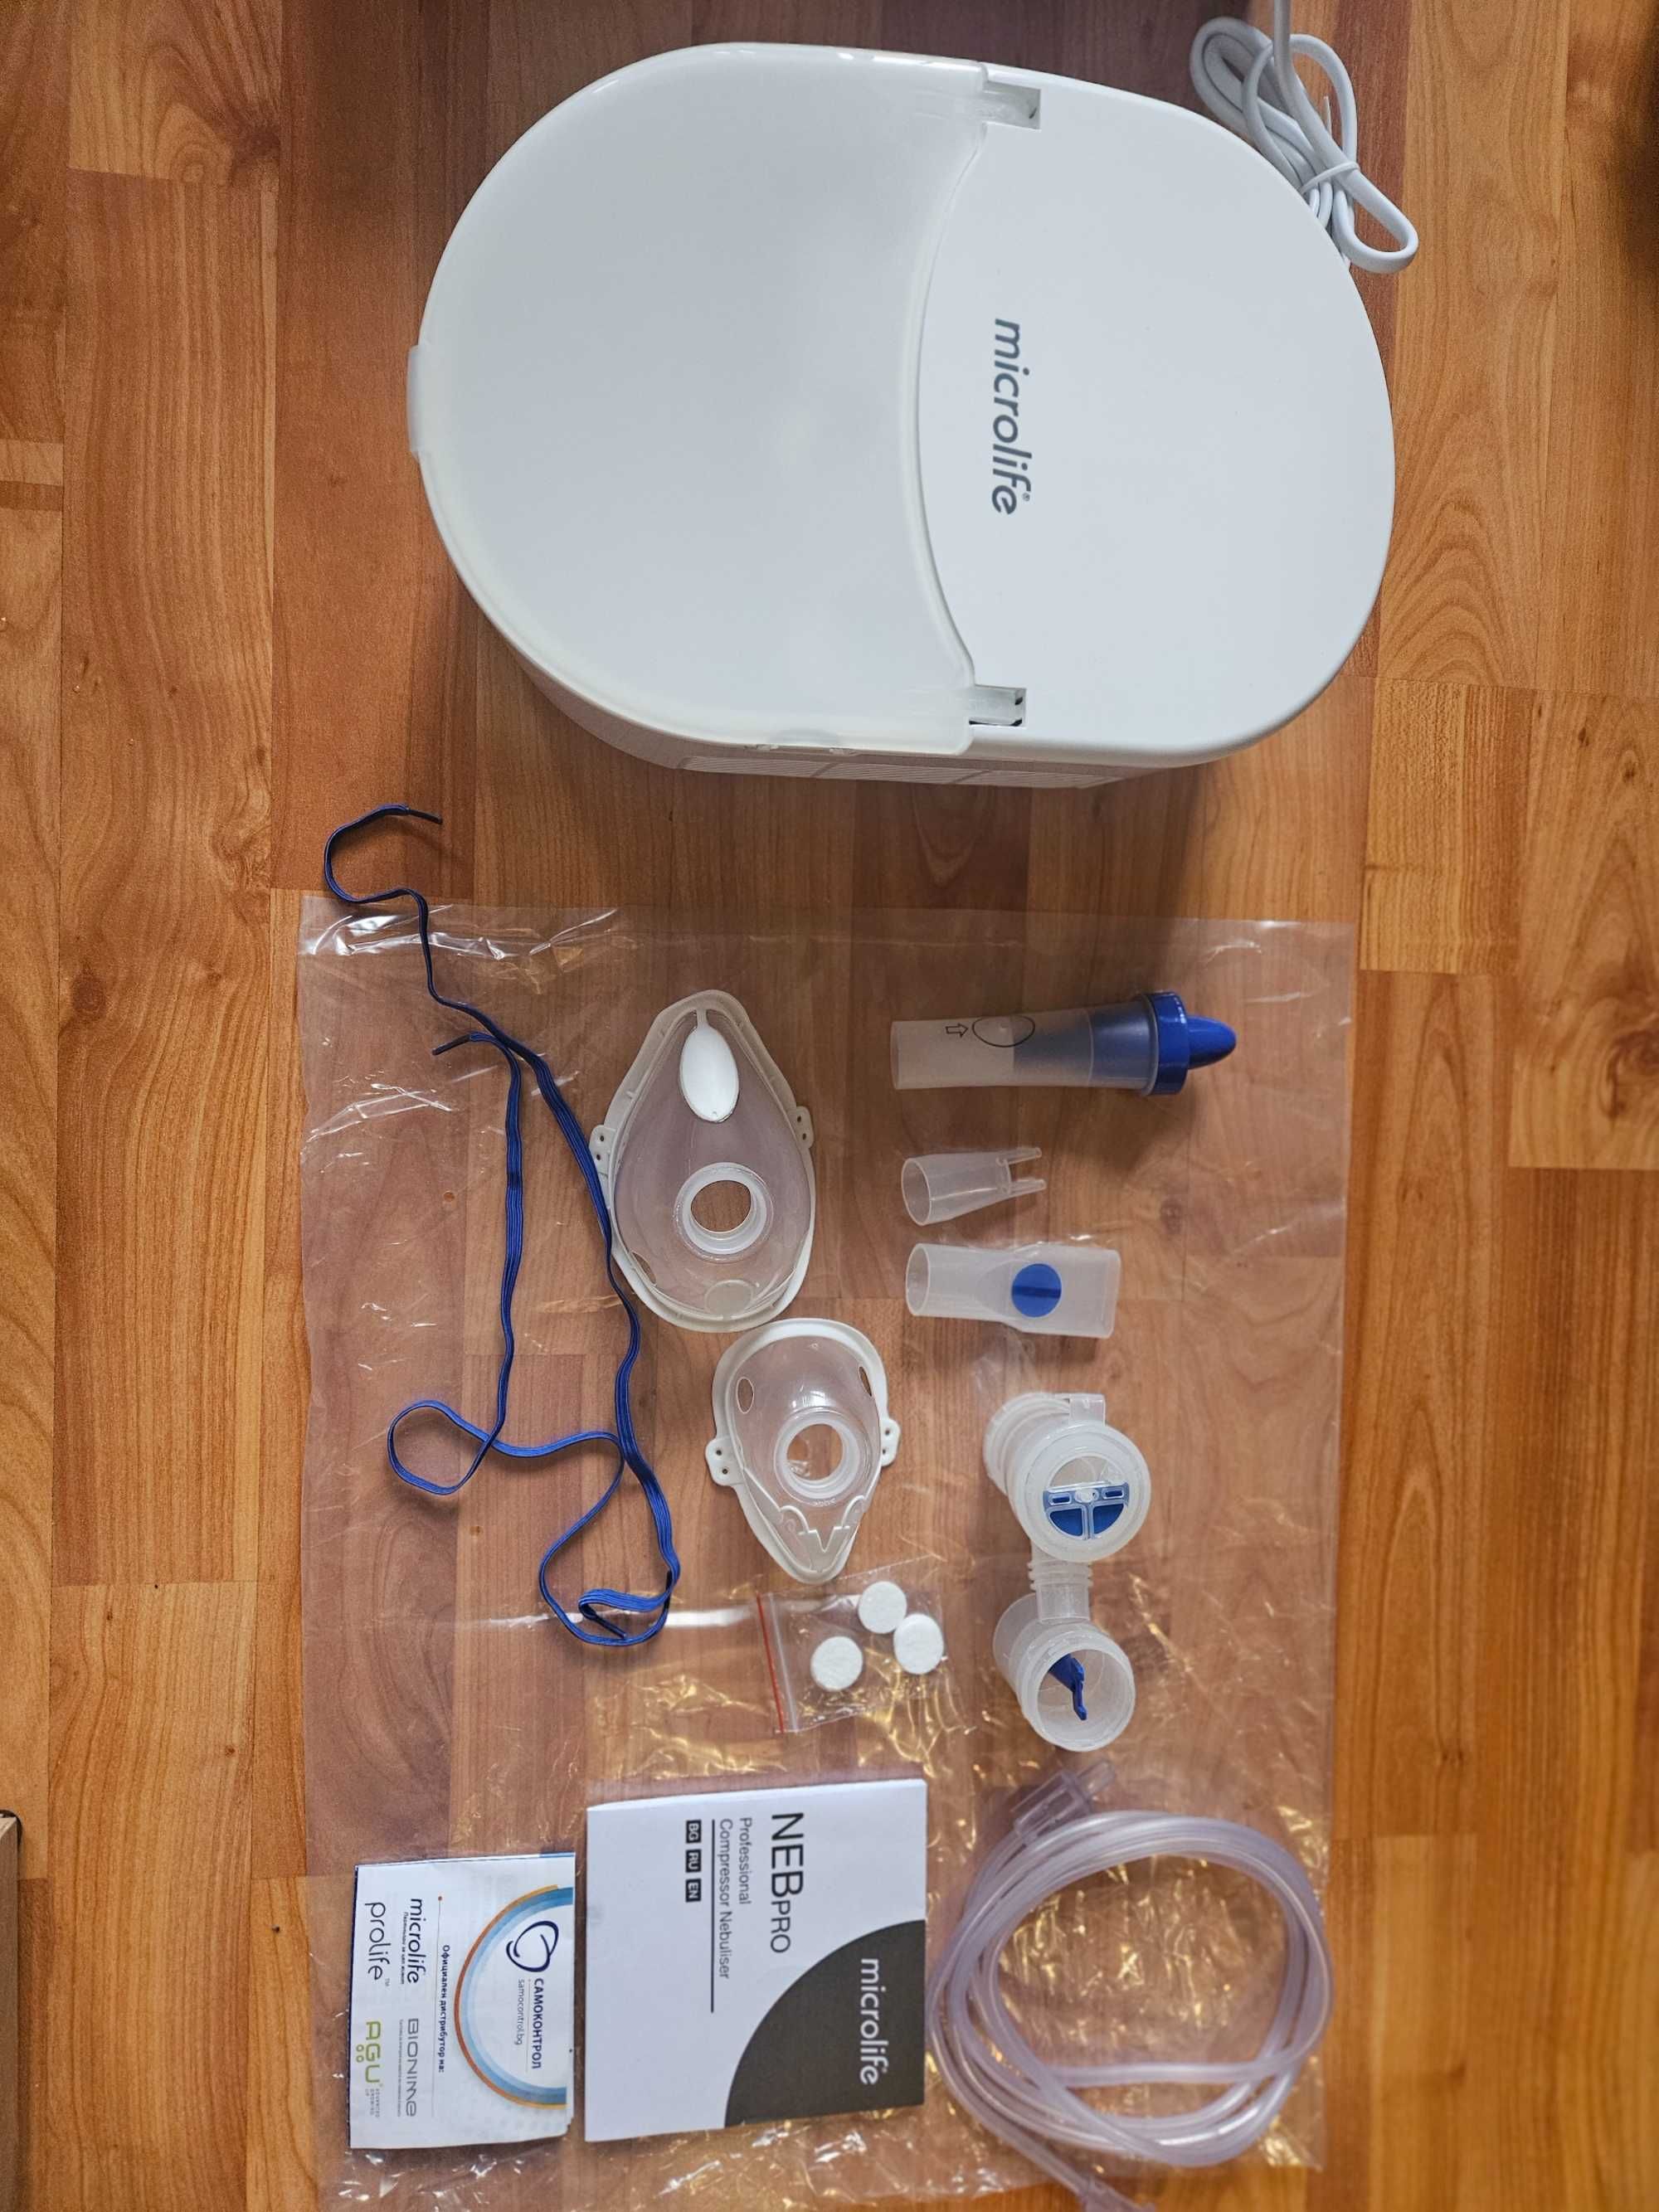 Microlife Neb Pro компресорен инхалатор